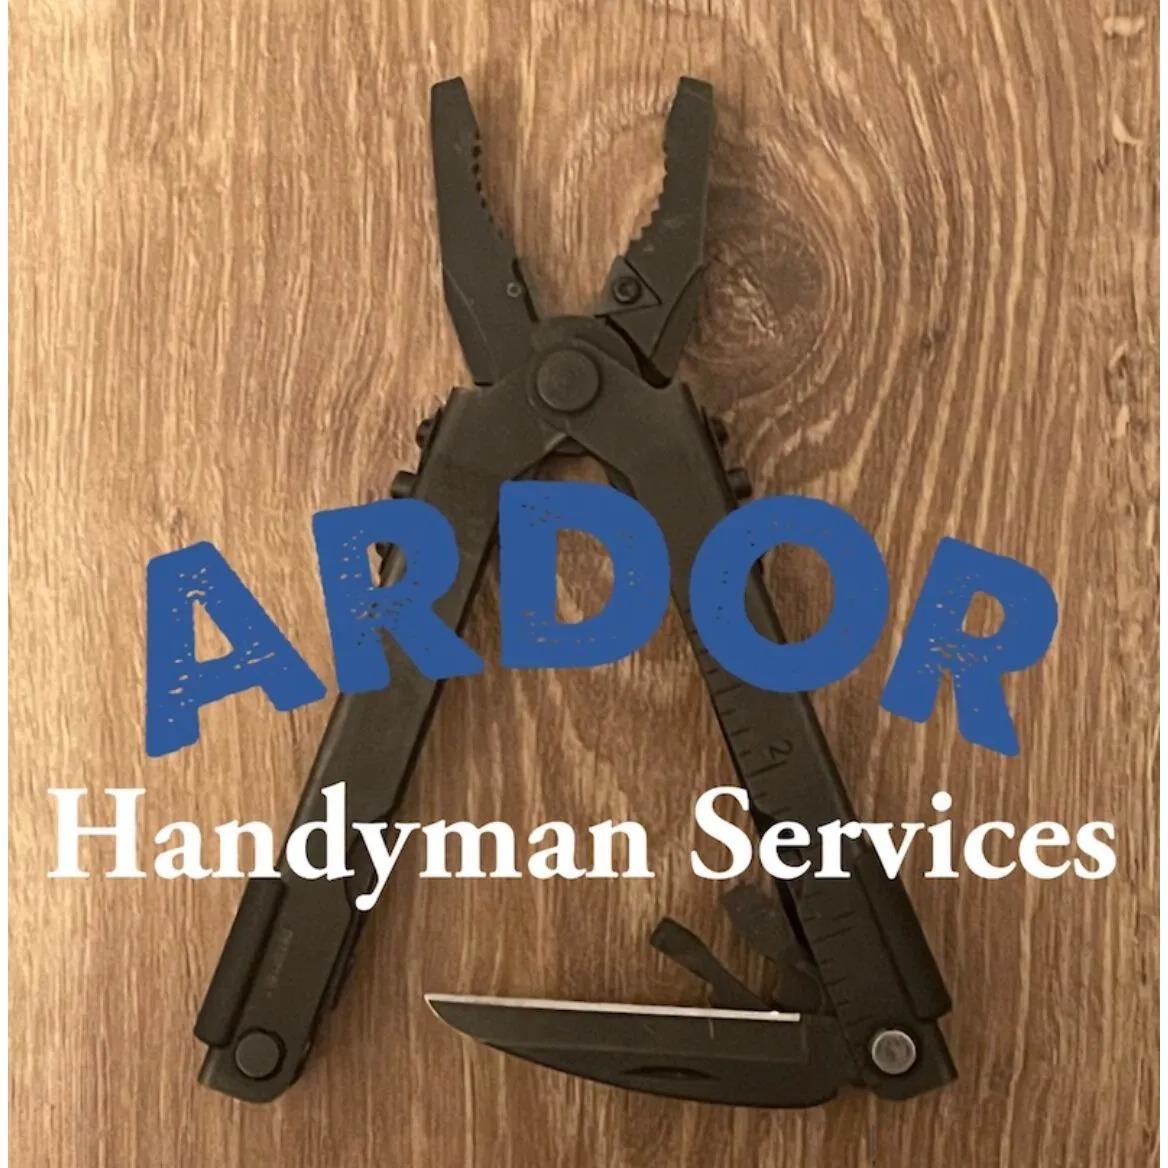 Ardor Handyman Services - Sun Valley, NV - (775)530-8345 | ShowMeLocal.com